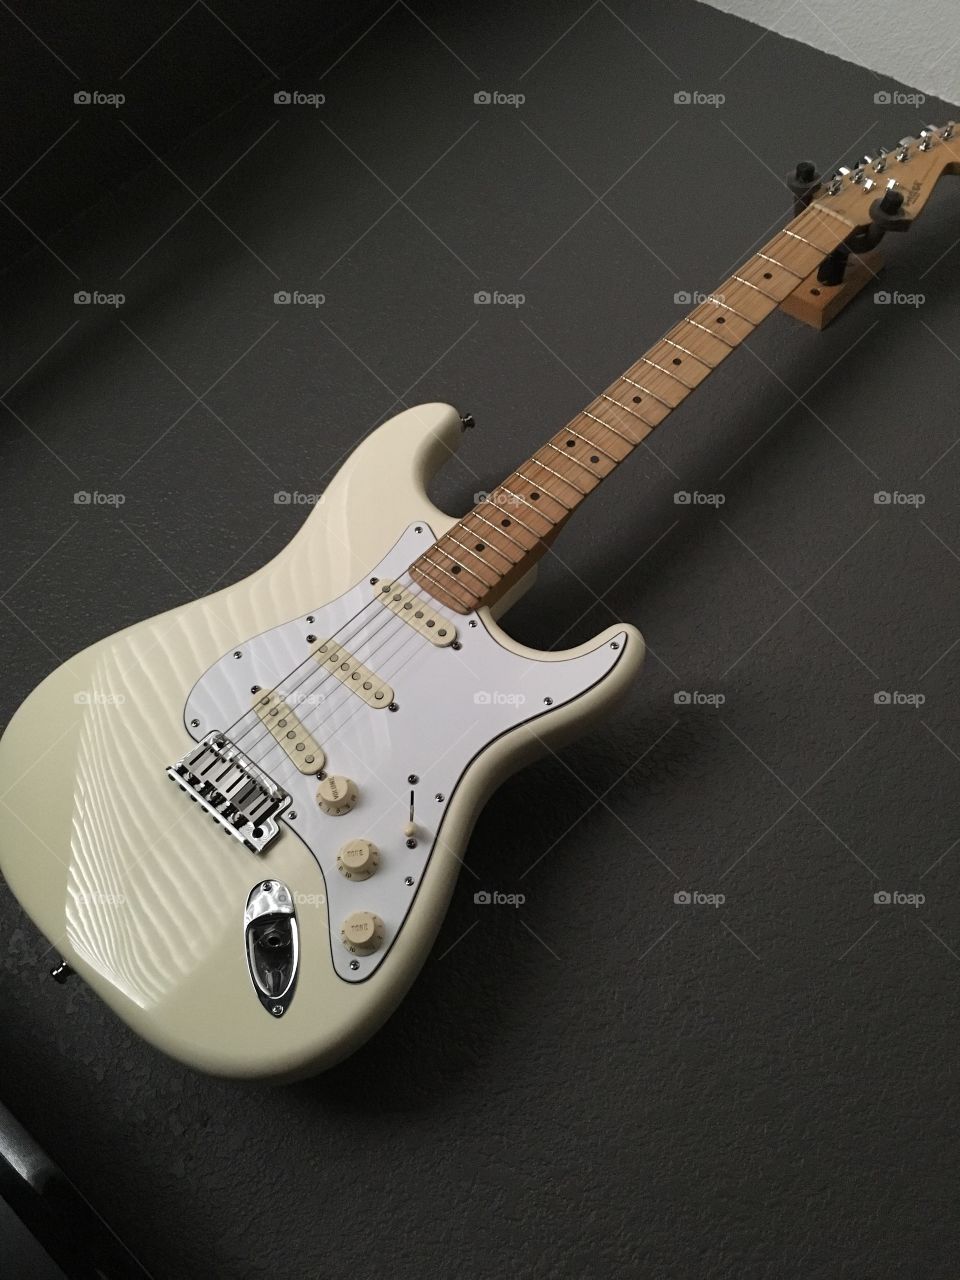 Fender American Strat